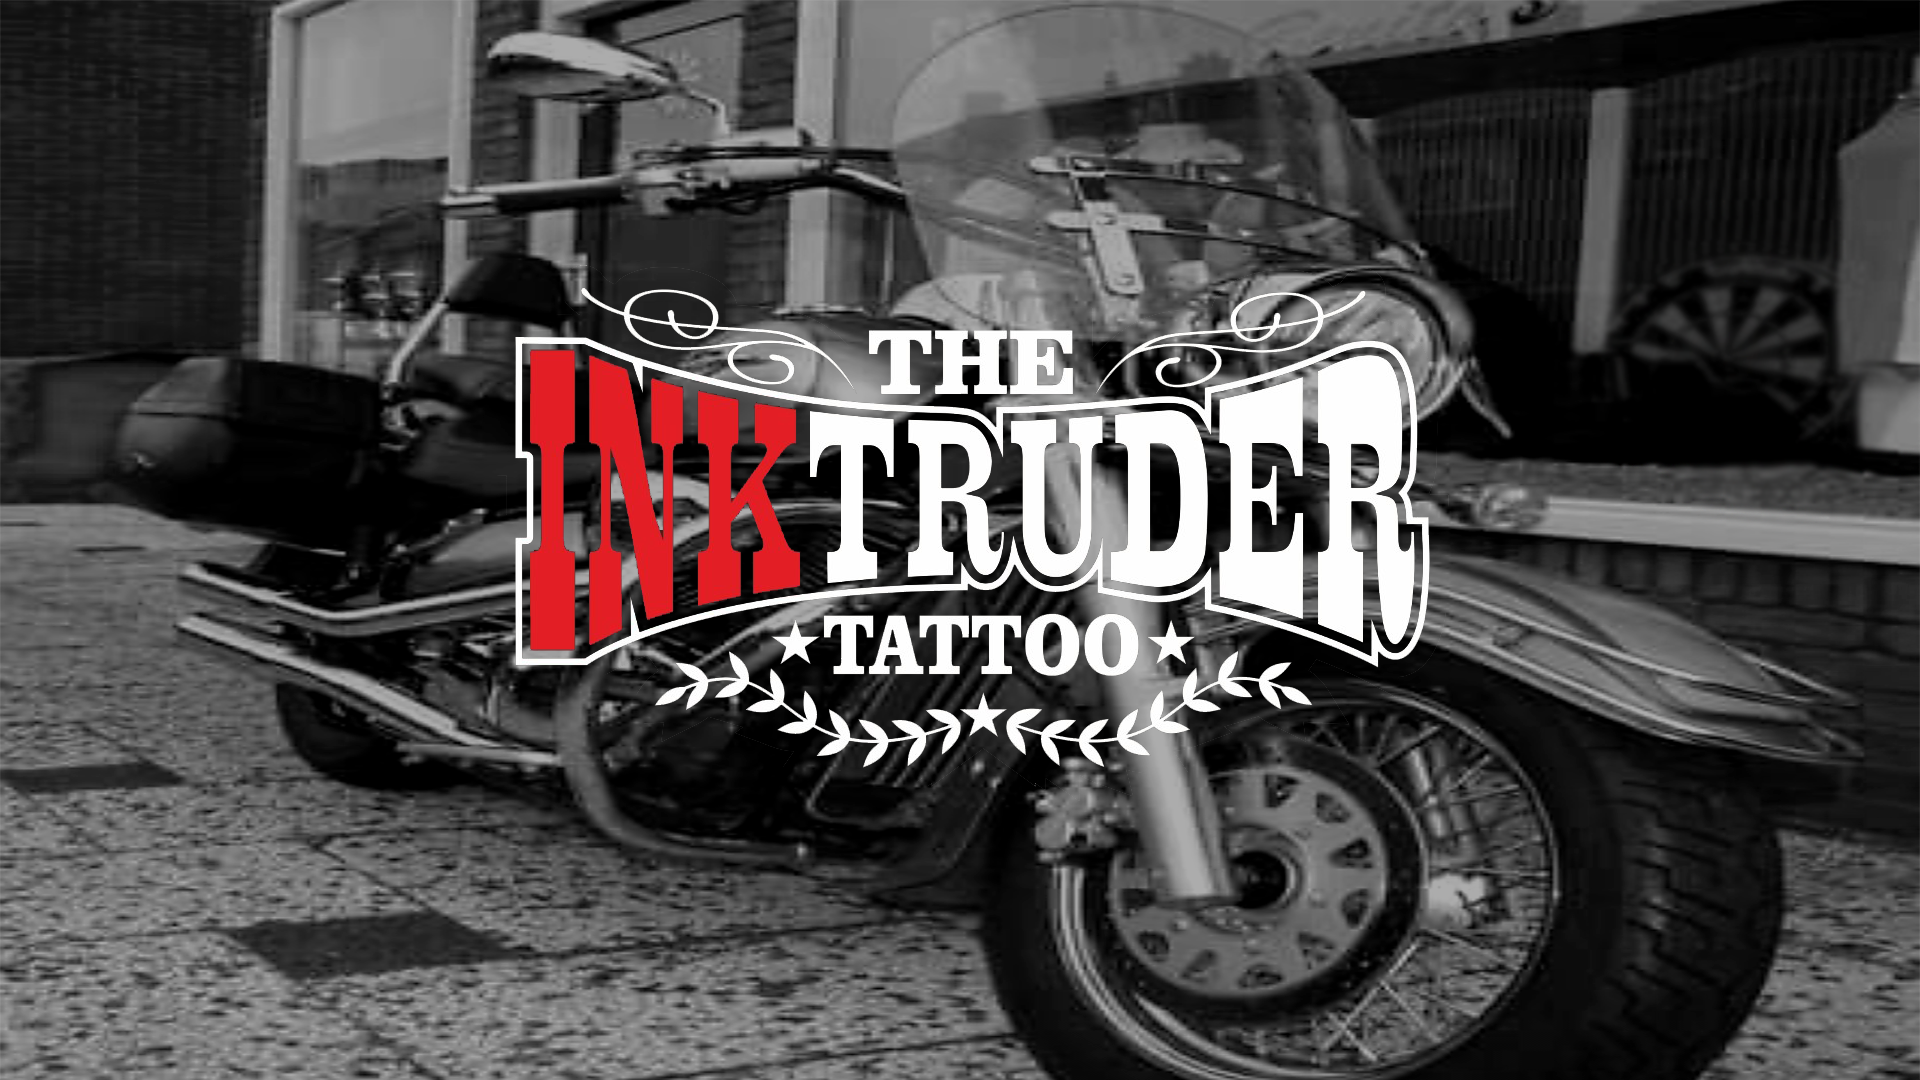 Tattoo studio The Inktruder